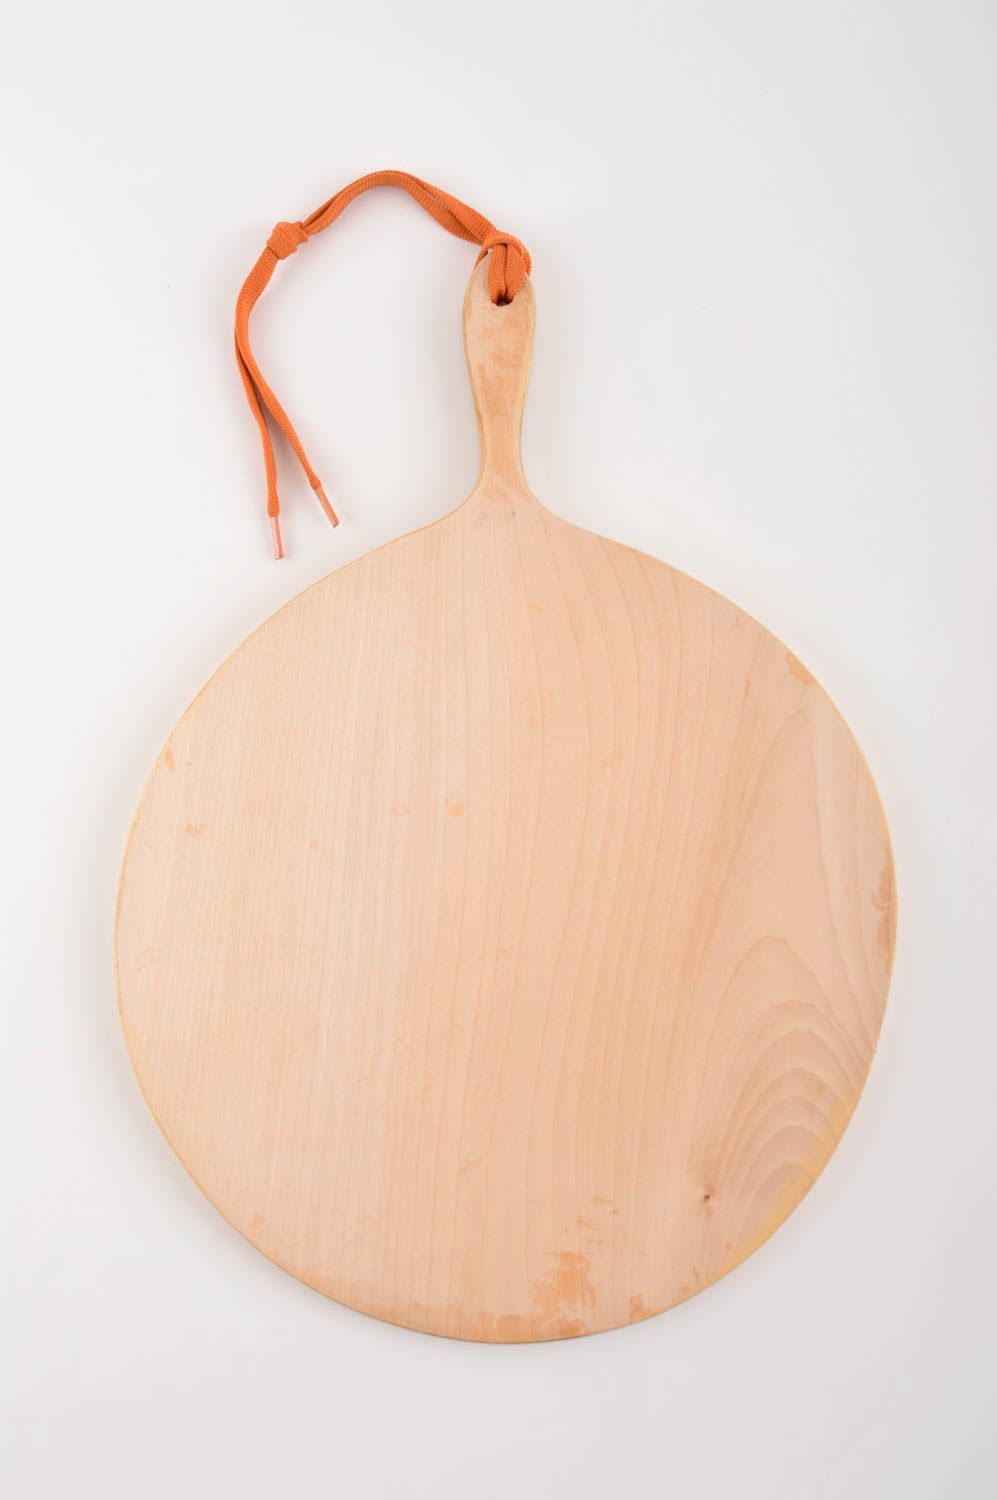 Handmade cutting board wooden chopping board kitchen decor wooden utensils photo 3